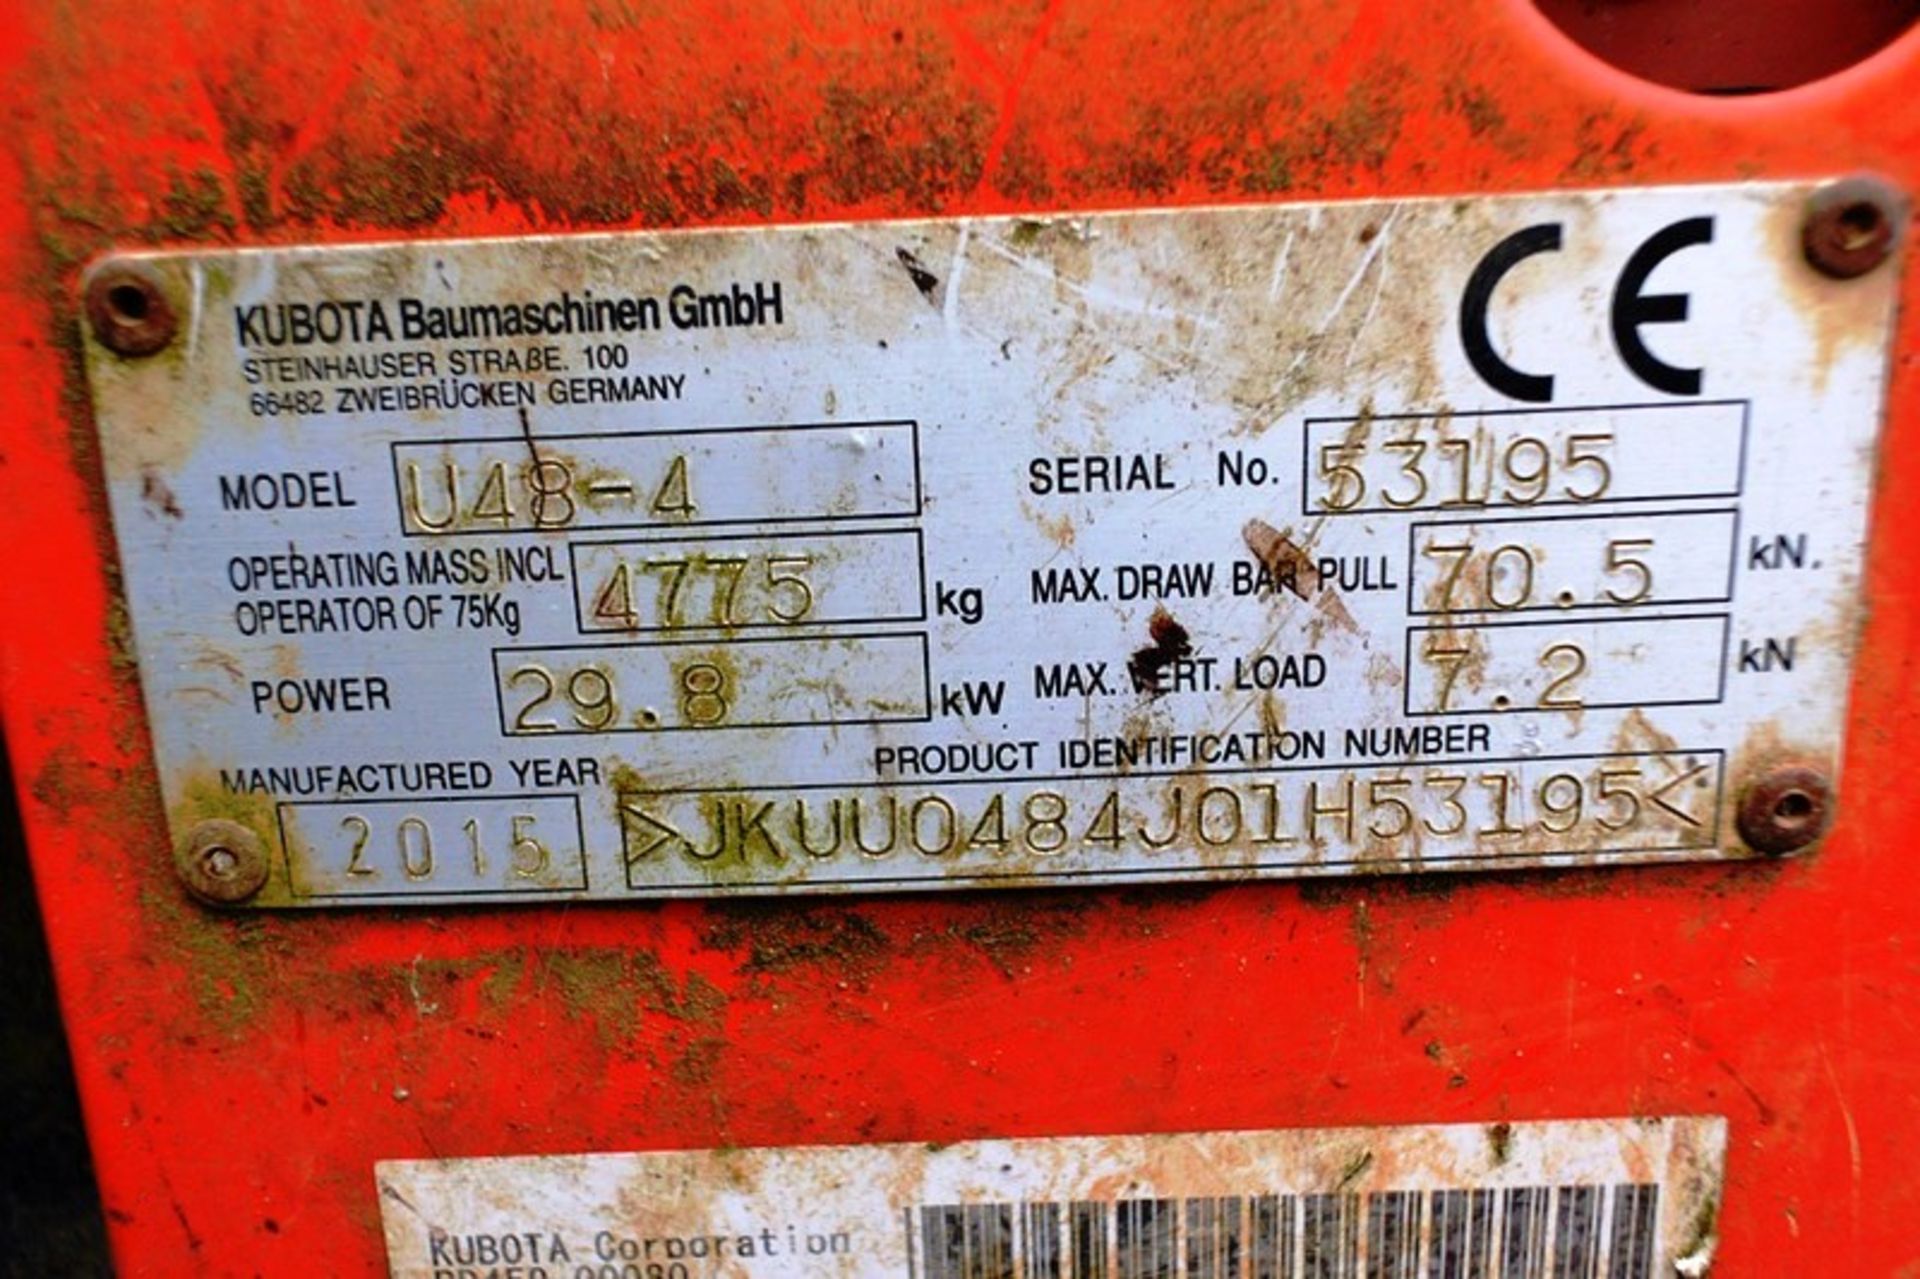 Kubota U48-4 rubber tracked 5 ton digger/mini excavator, serial no. 53195 (2015), Product ID No. - Image 13 of 16